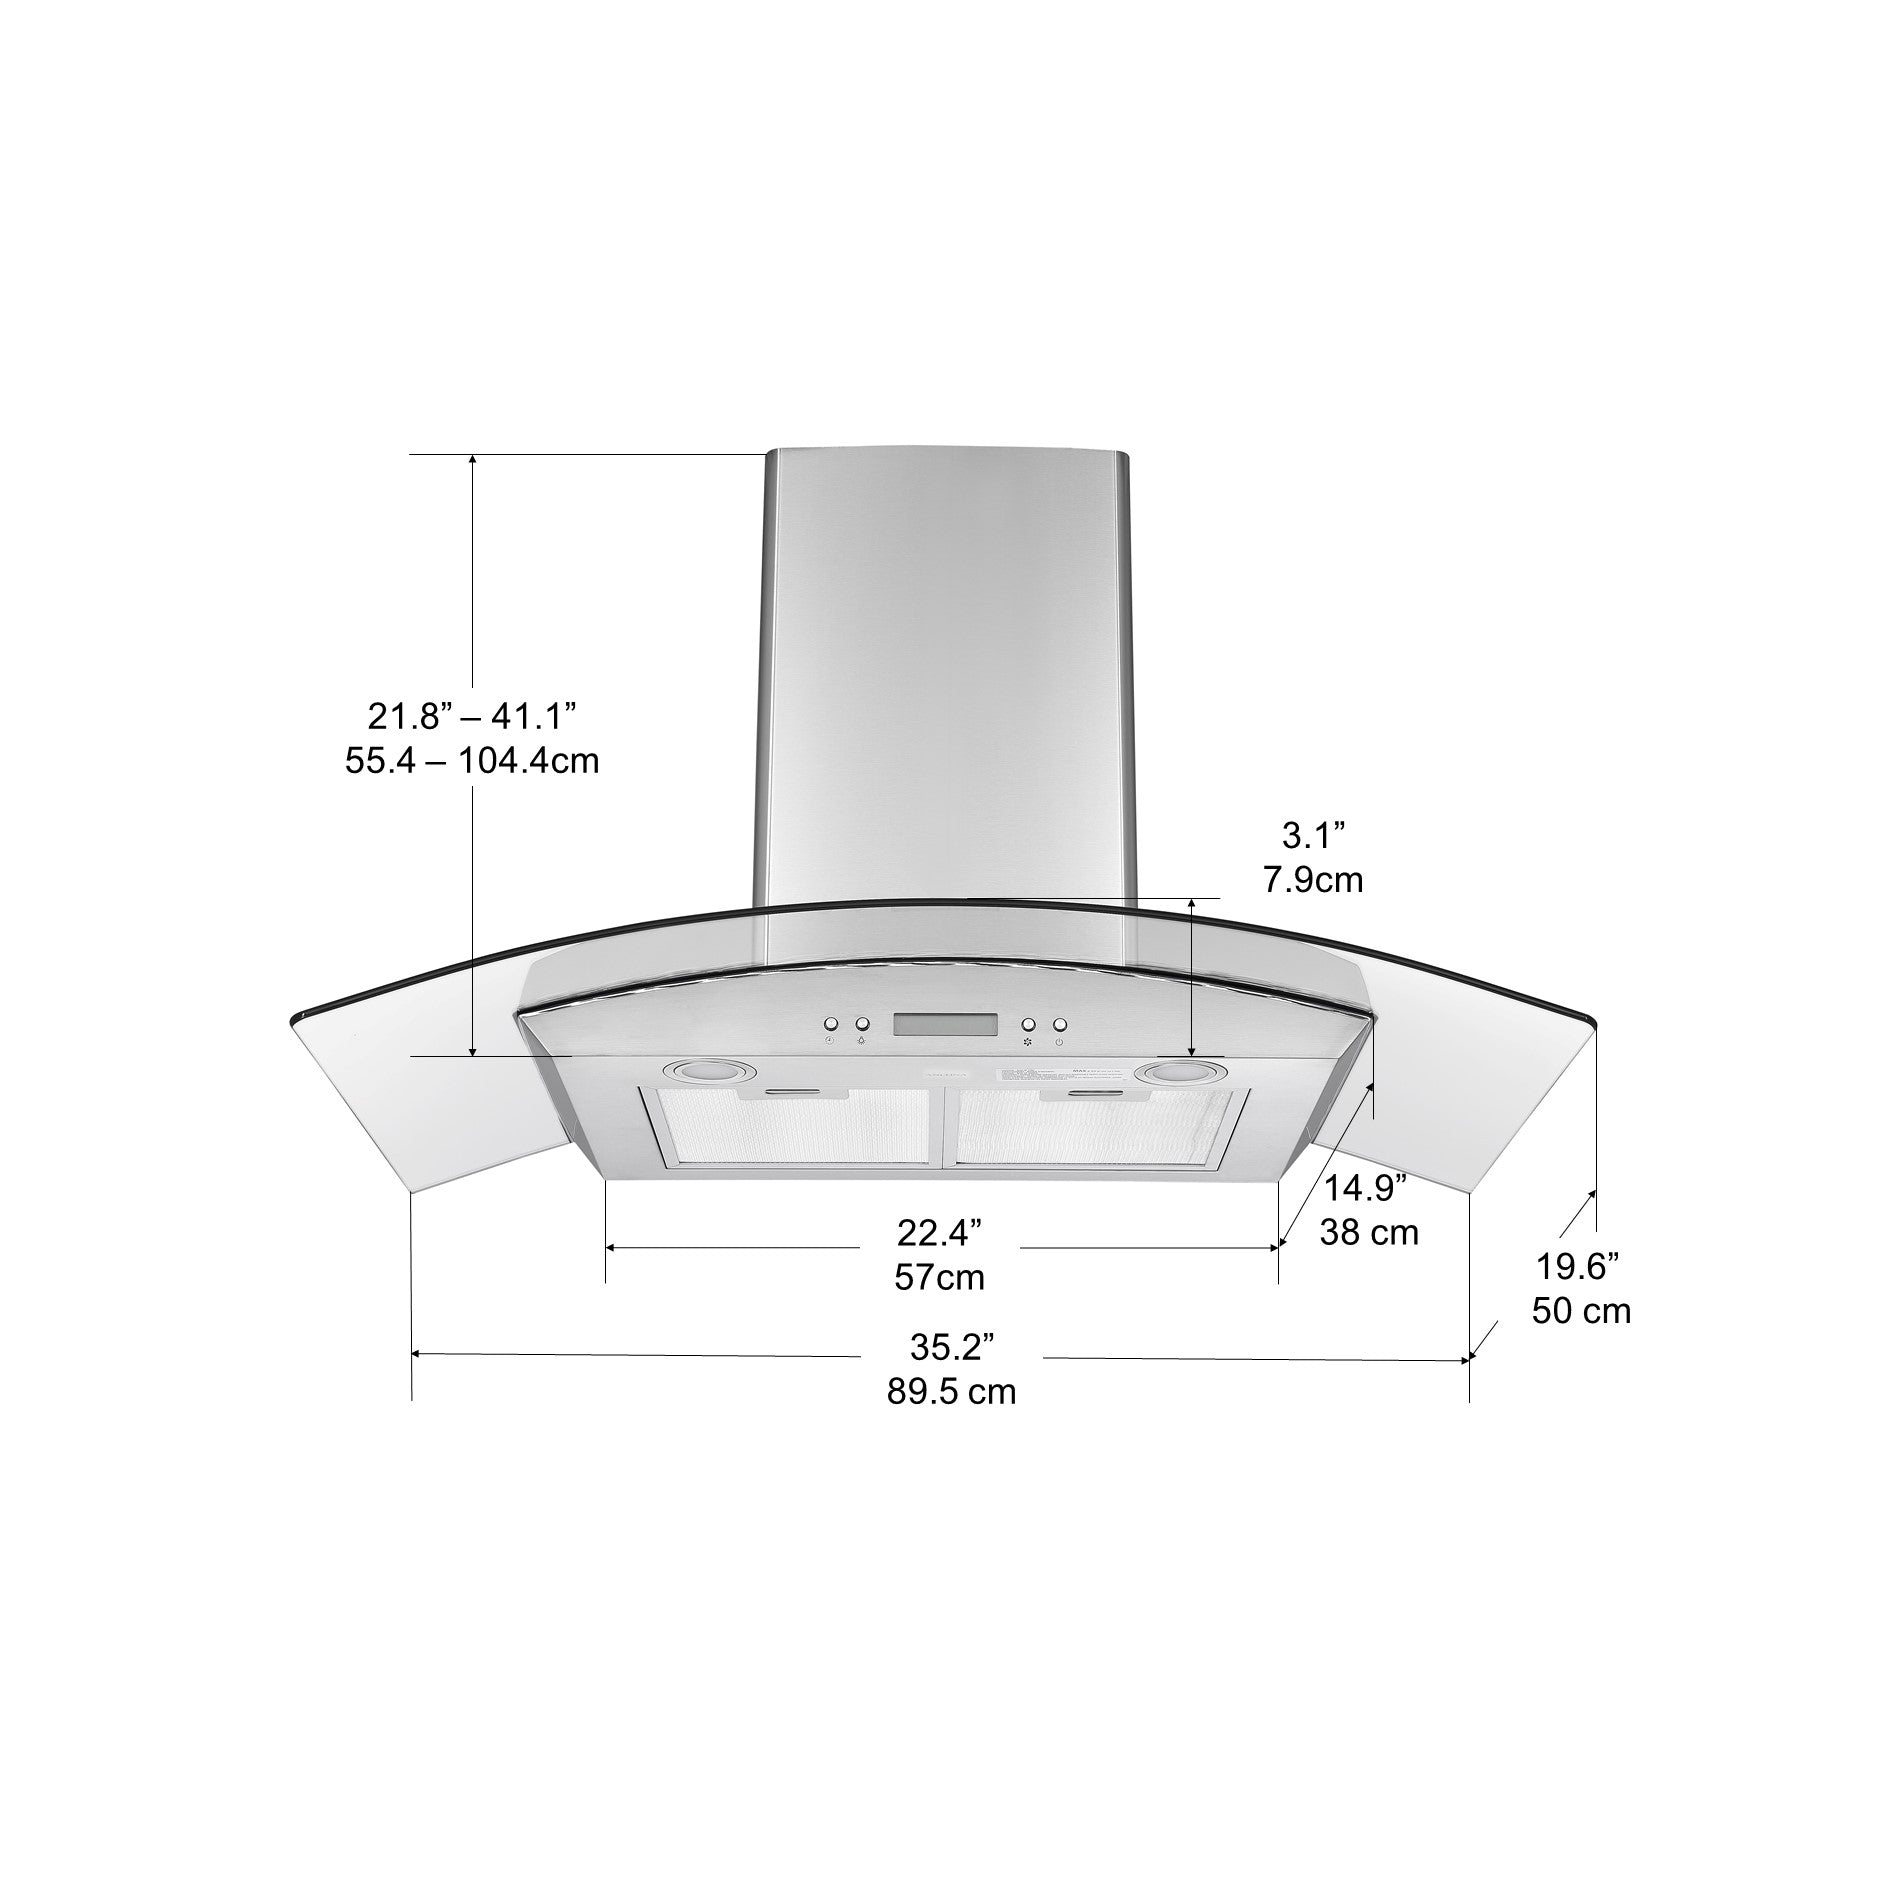 GCHD436 36 in. Glass Canopy Range Hood in Stainless Steel